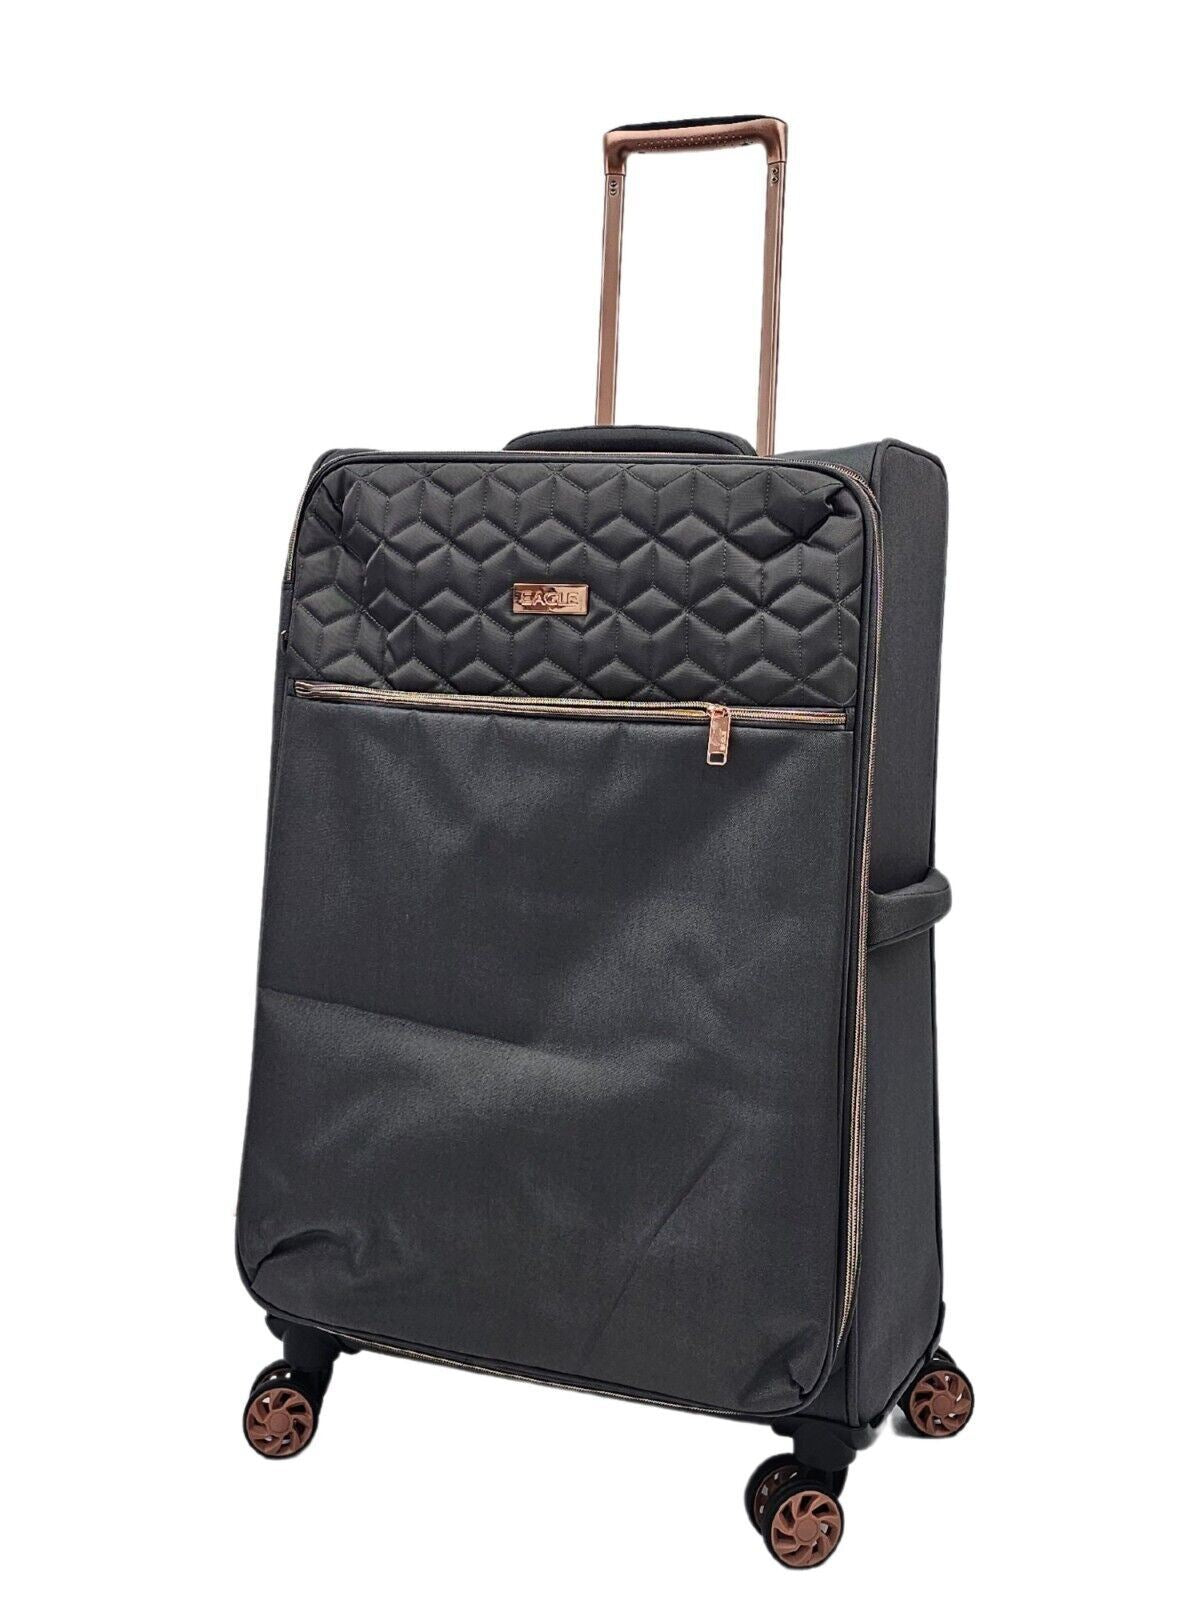 4 Wheel Lightweight Suitcase Luggage Travel Bags Set